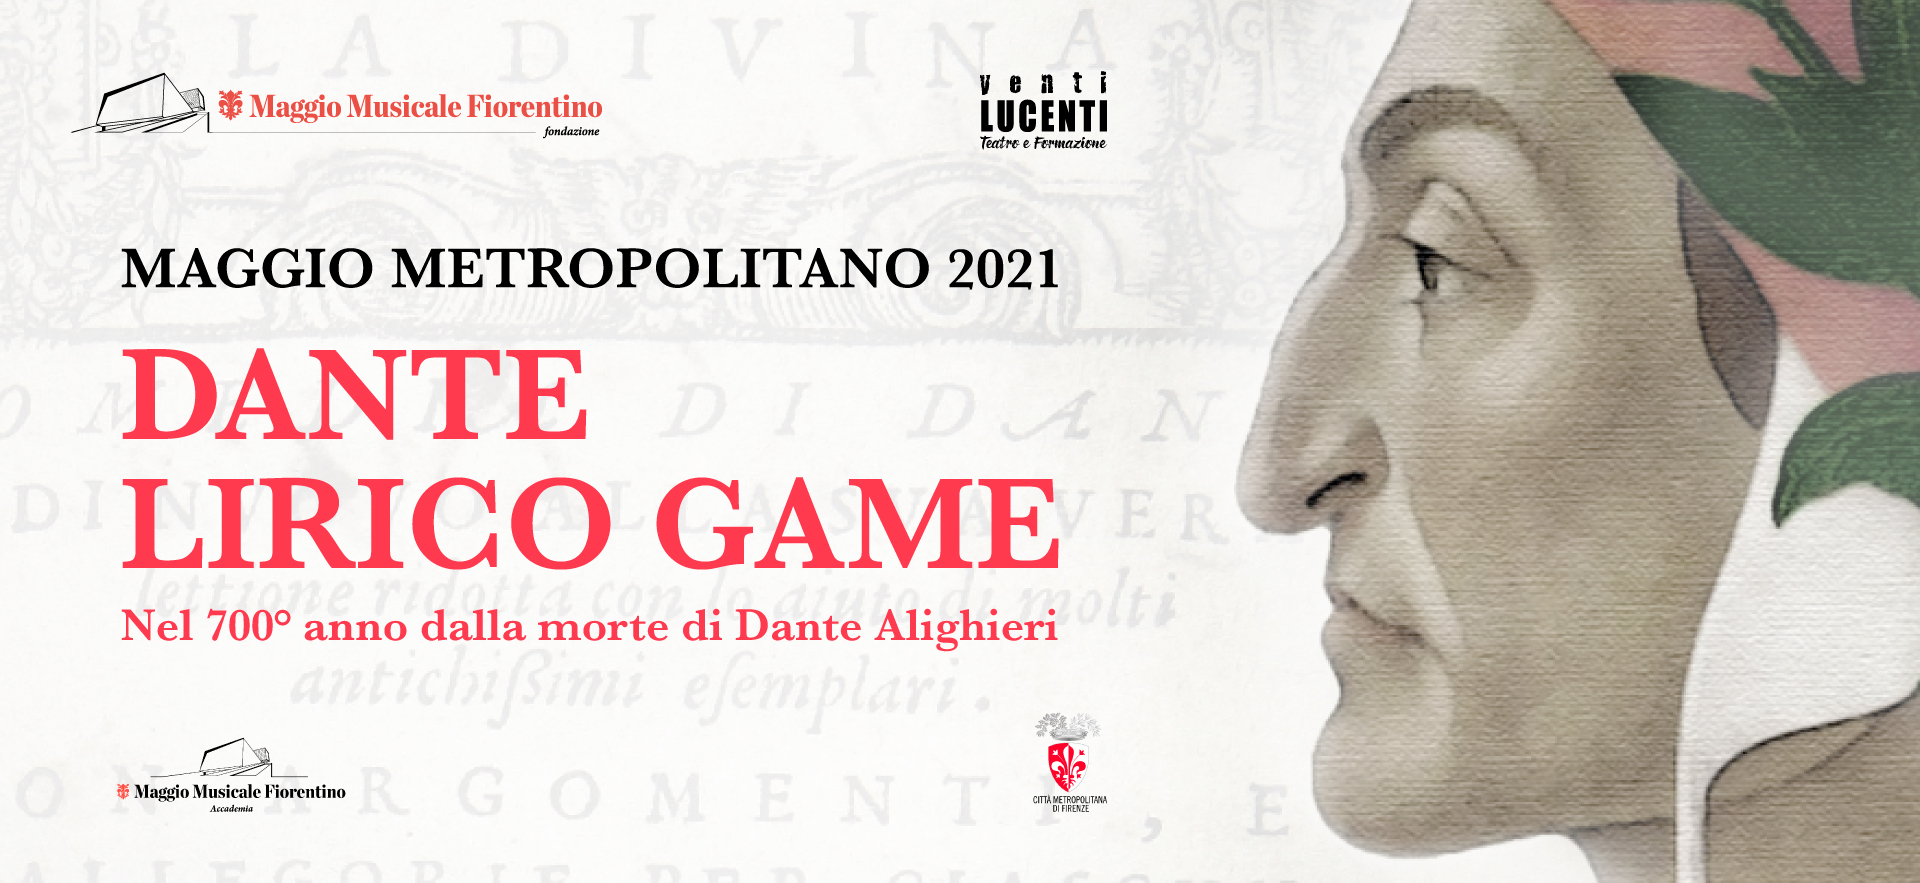 'Dante Lirico Game'